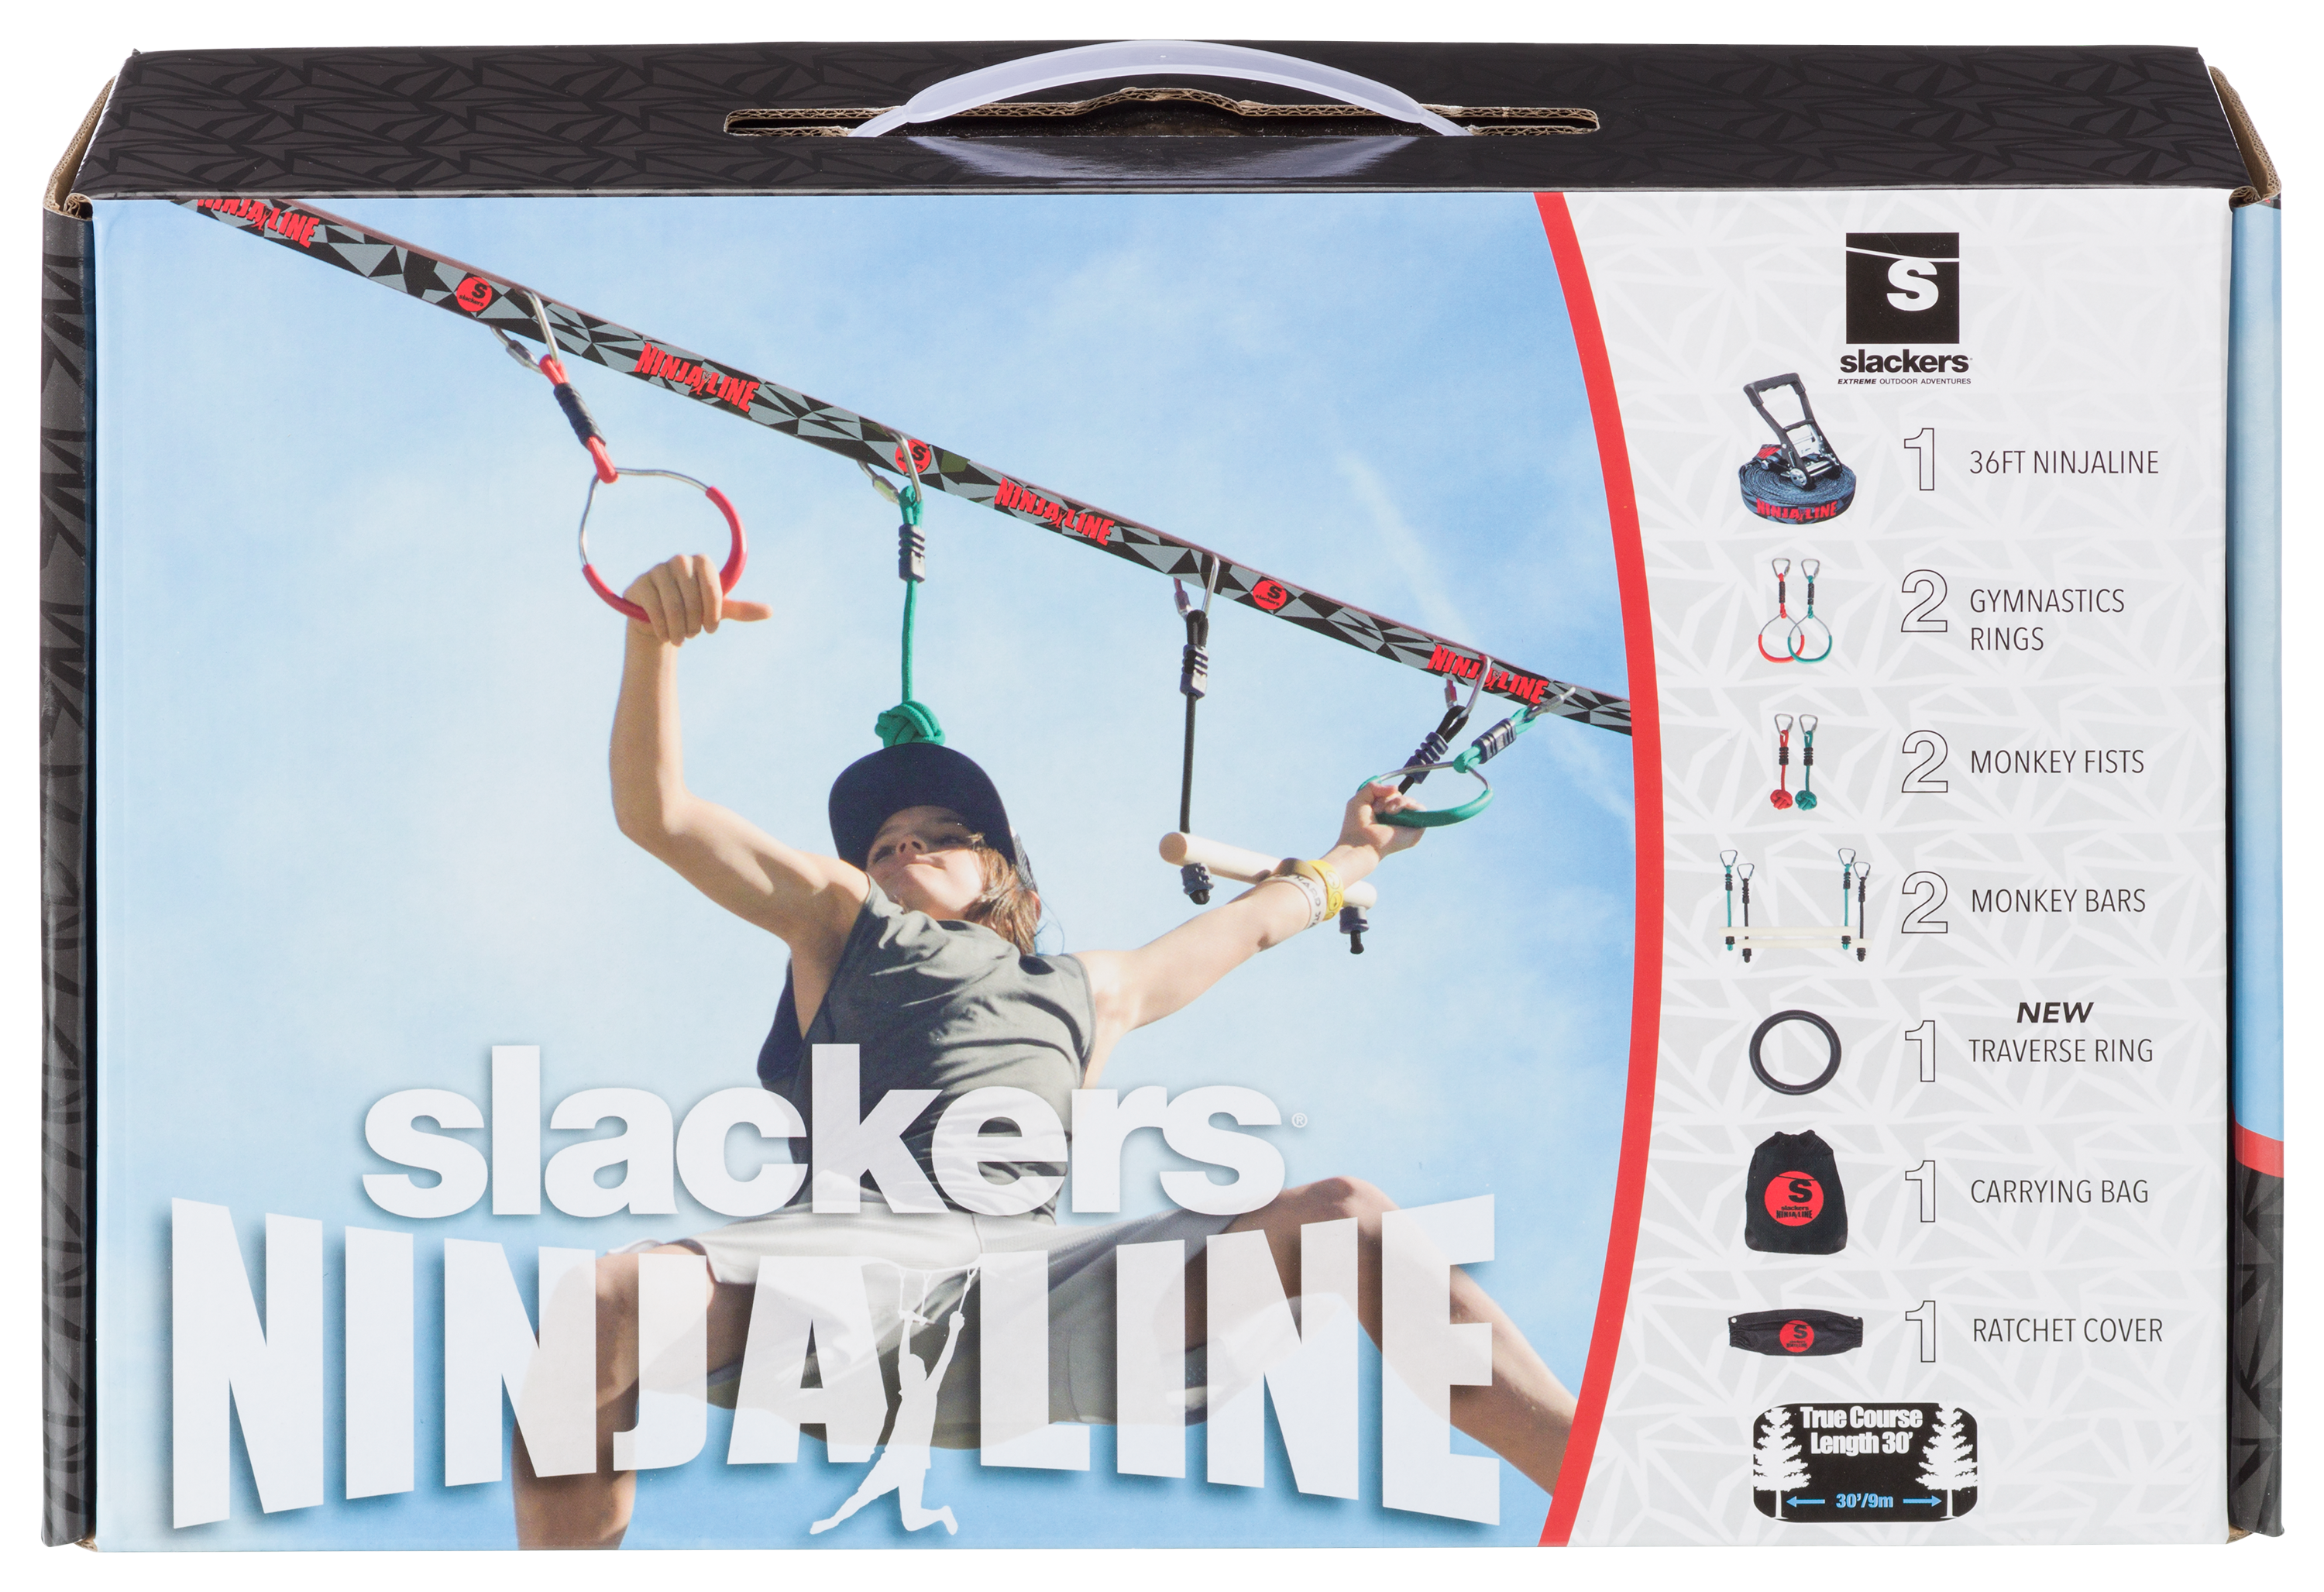 B4 Adventure Slackers Ninjaline 36' Backyard Outdoor Hanging Obstacle Intro Kit